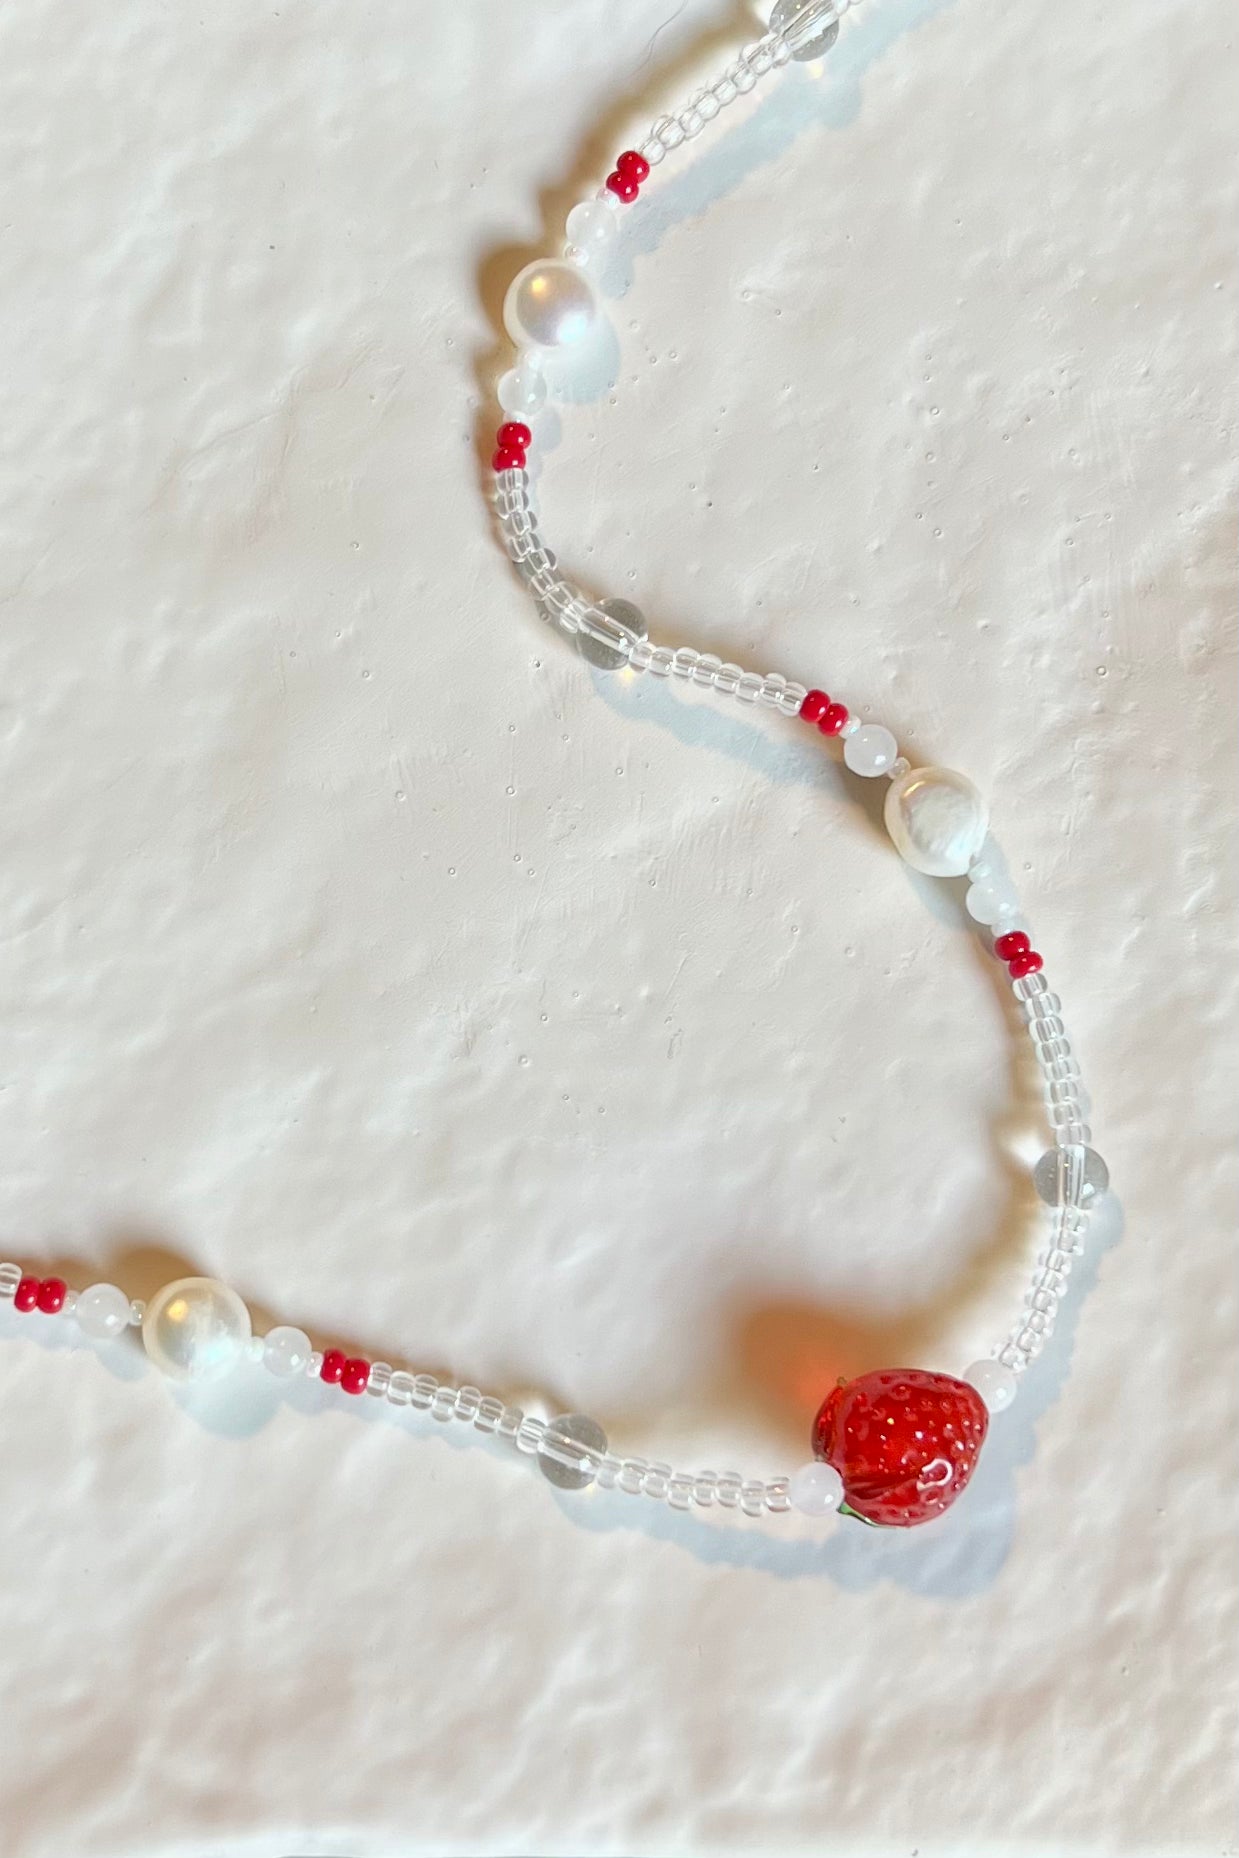 Strawberry bead necklace